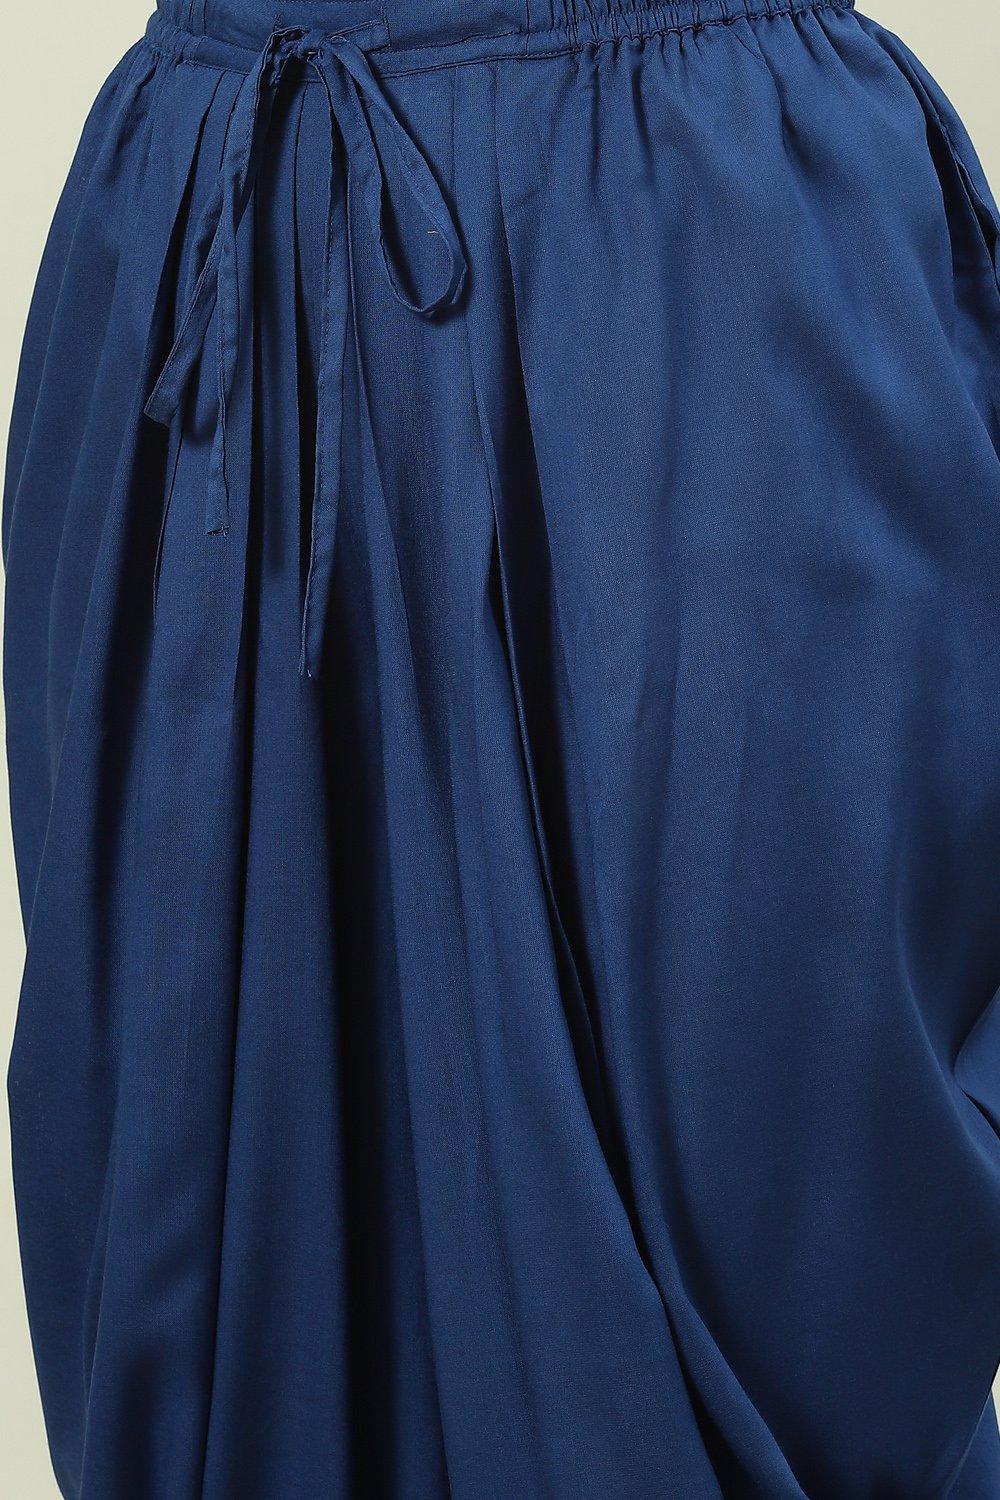 Blue & Navy Blue Printed Gathered Suit Set image number 2